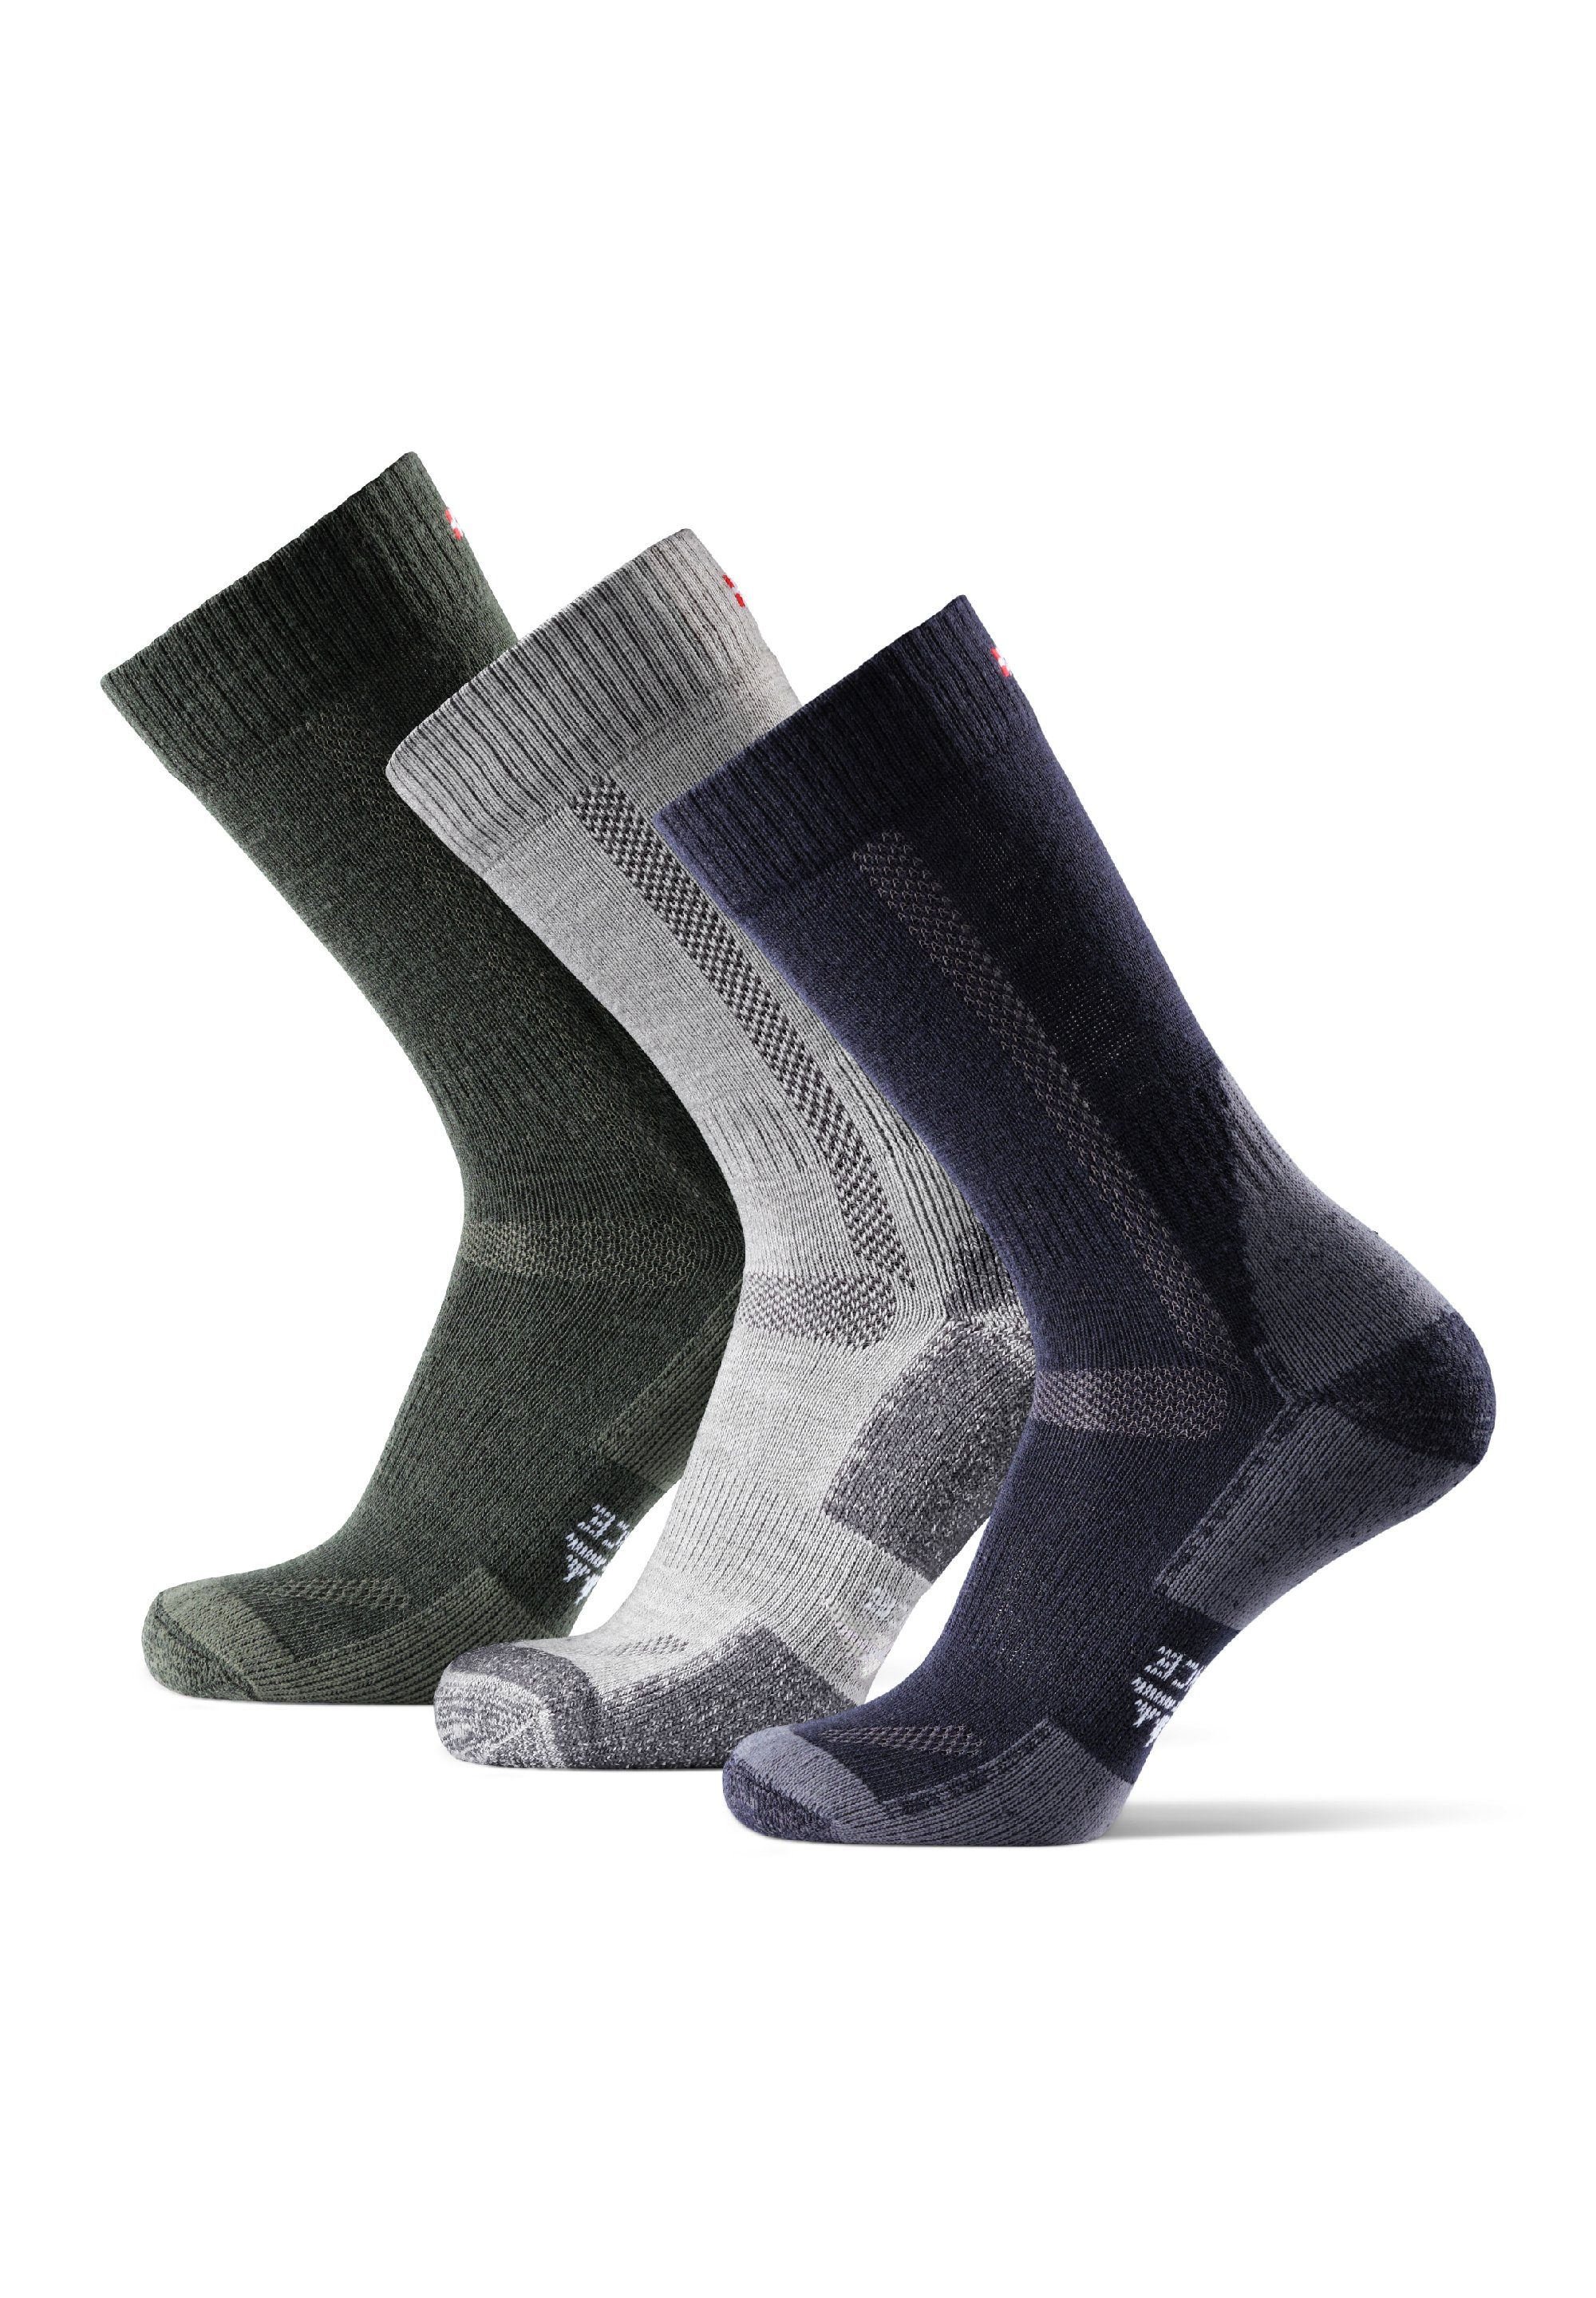 Kinder Merino DANISH & Damen Classic Socks Hiking blue (Packung, dark Herren, ENDURANCE 3-Paar) Wandersocken für Anti-Blasen,